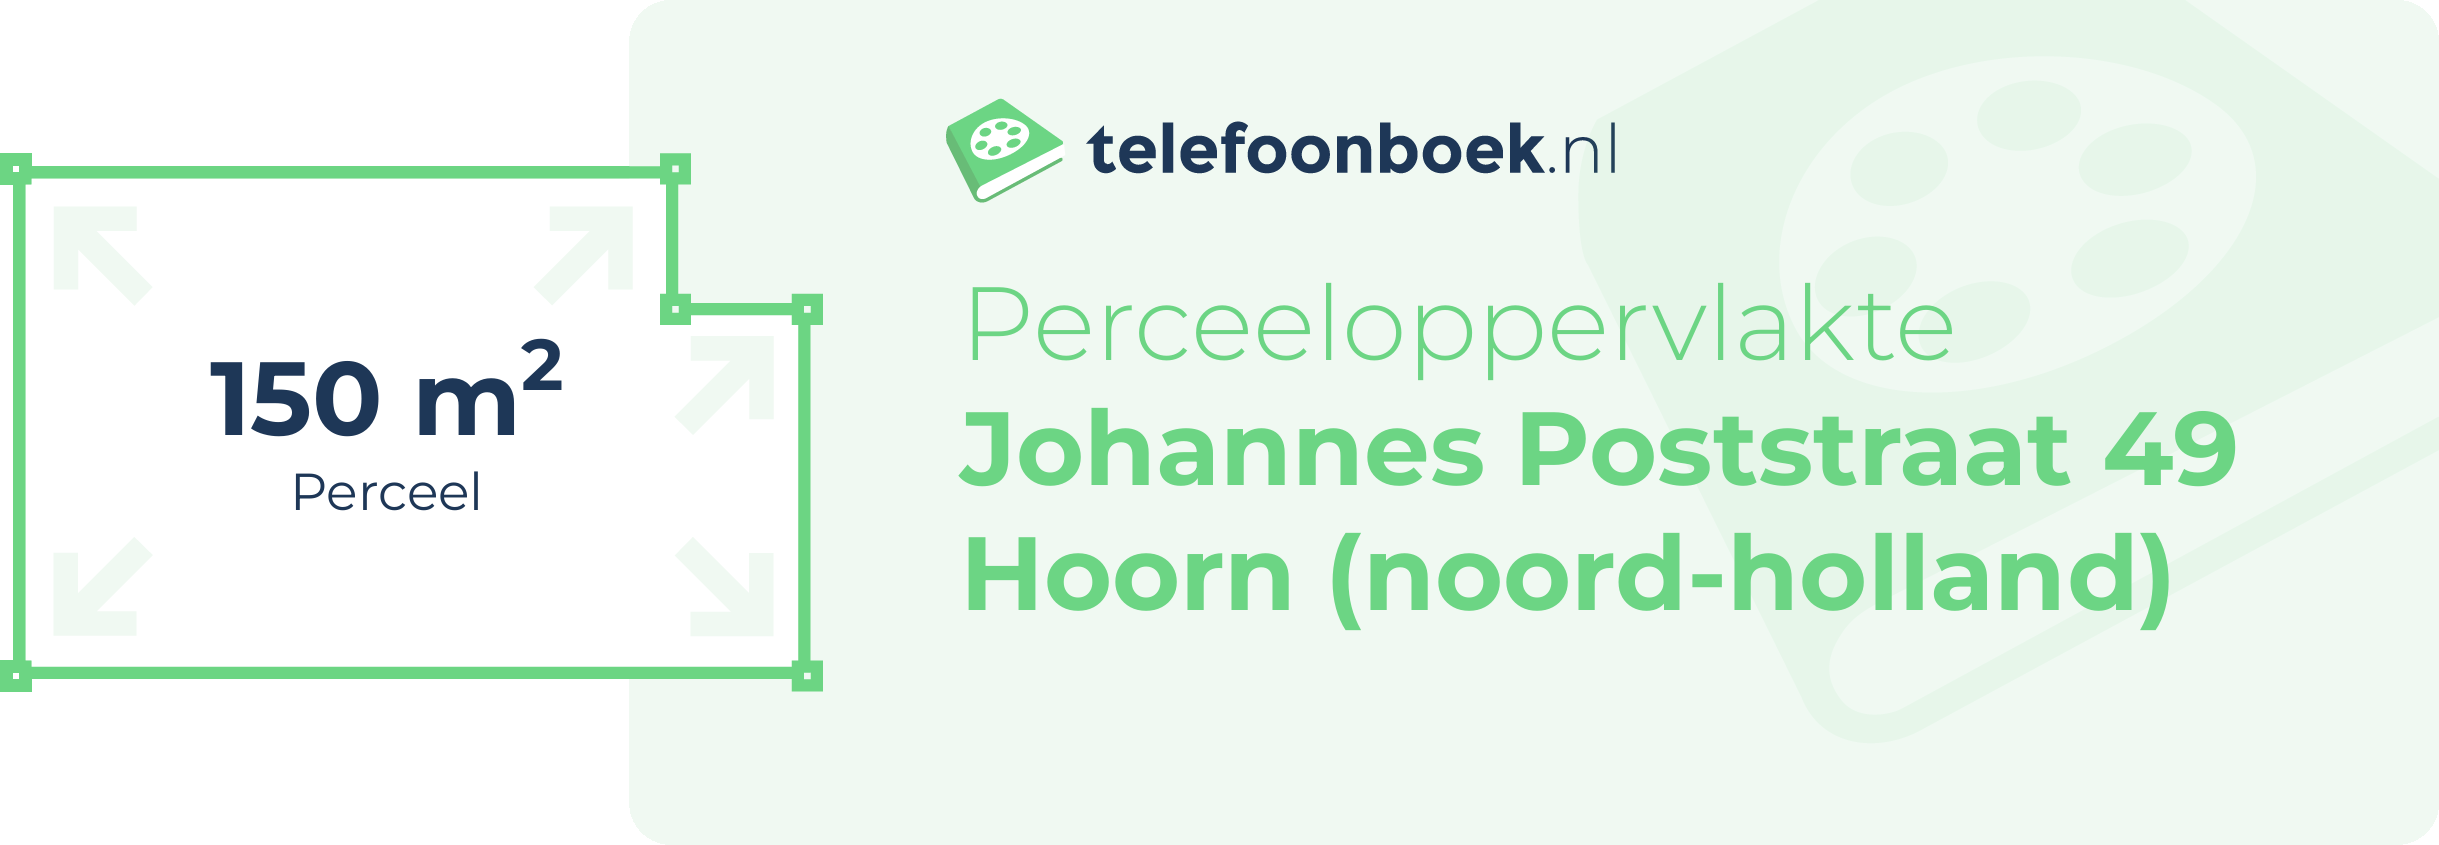 Perceeloppervlakte Johannes Poststraat 49 Hoorn (Noord-Holland)